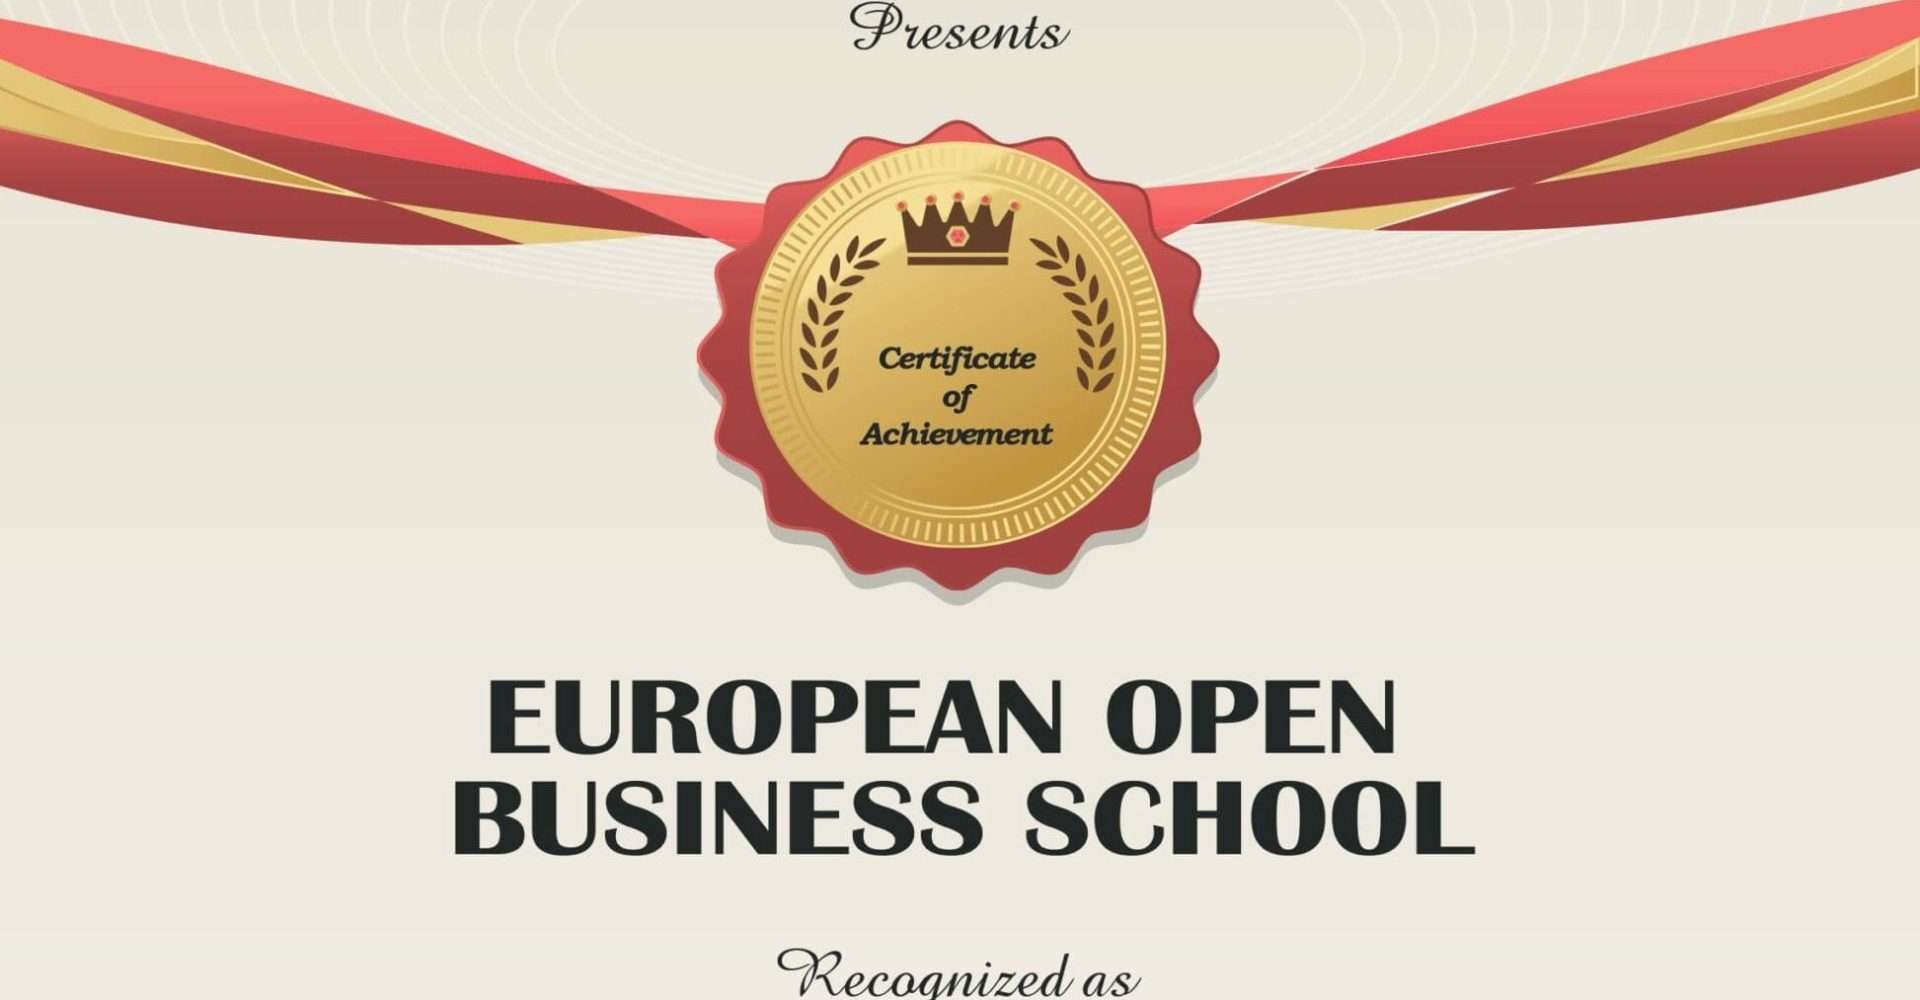 European Open Business School Higher Education Review Magazine